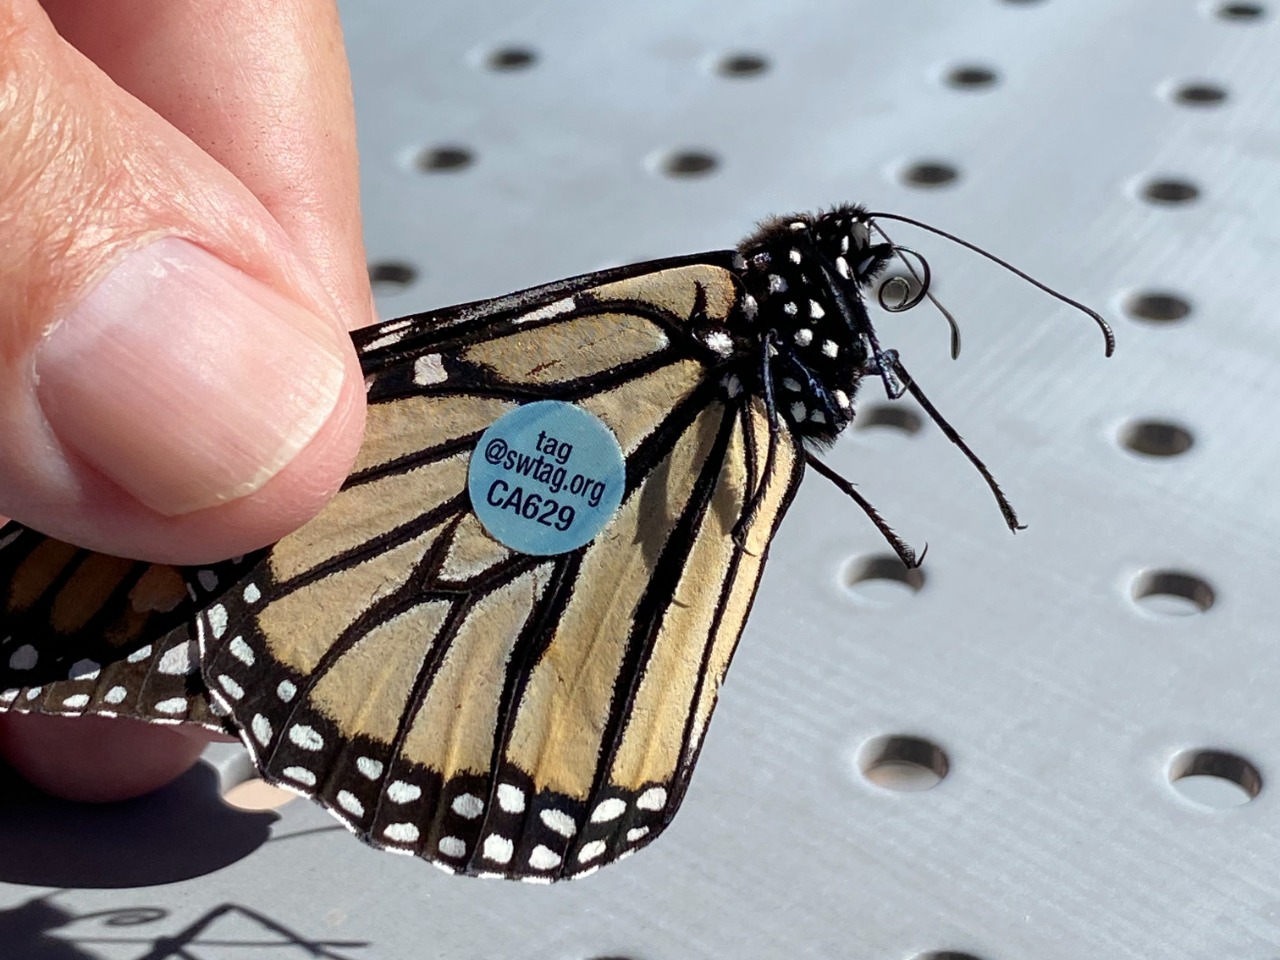 Tagged monarch in Arizona